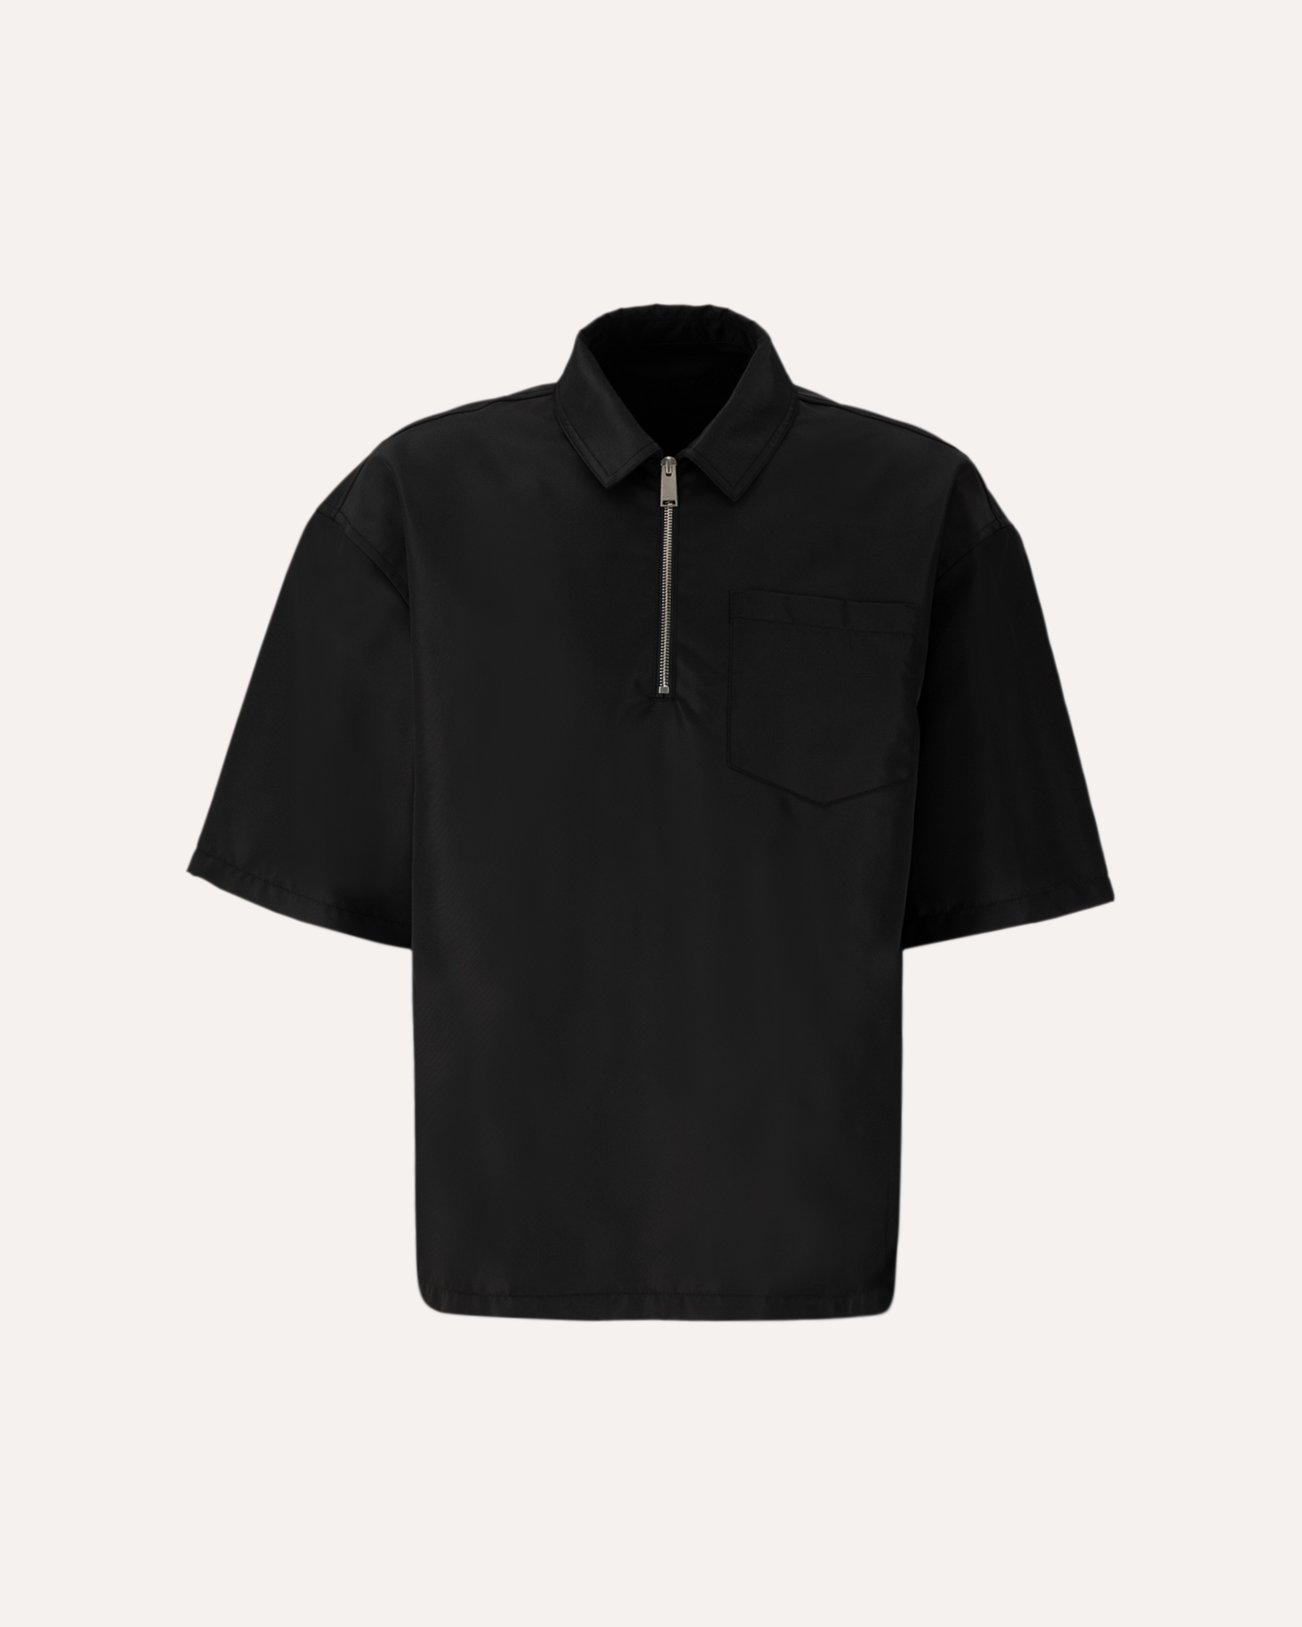 Heron Preston Ex-Ray Nylon Zip Ss Shirt BLACK 1